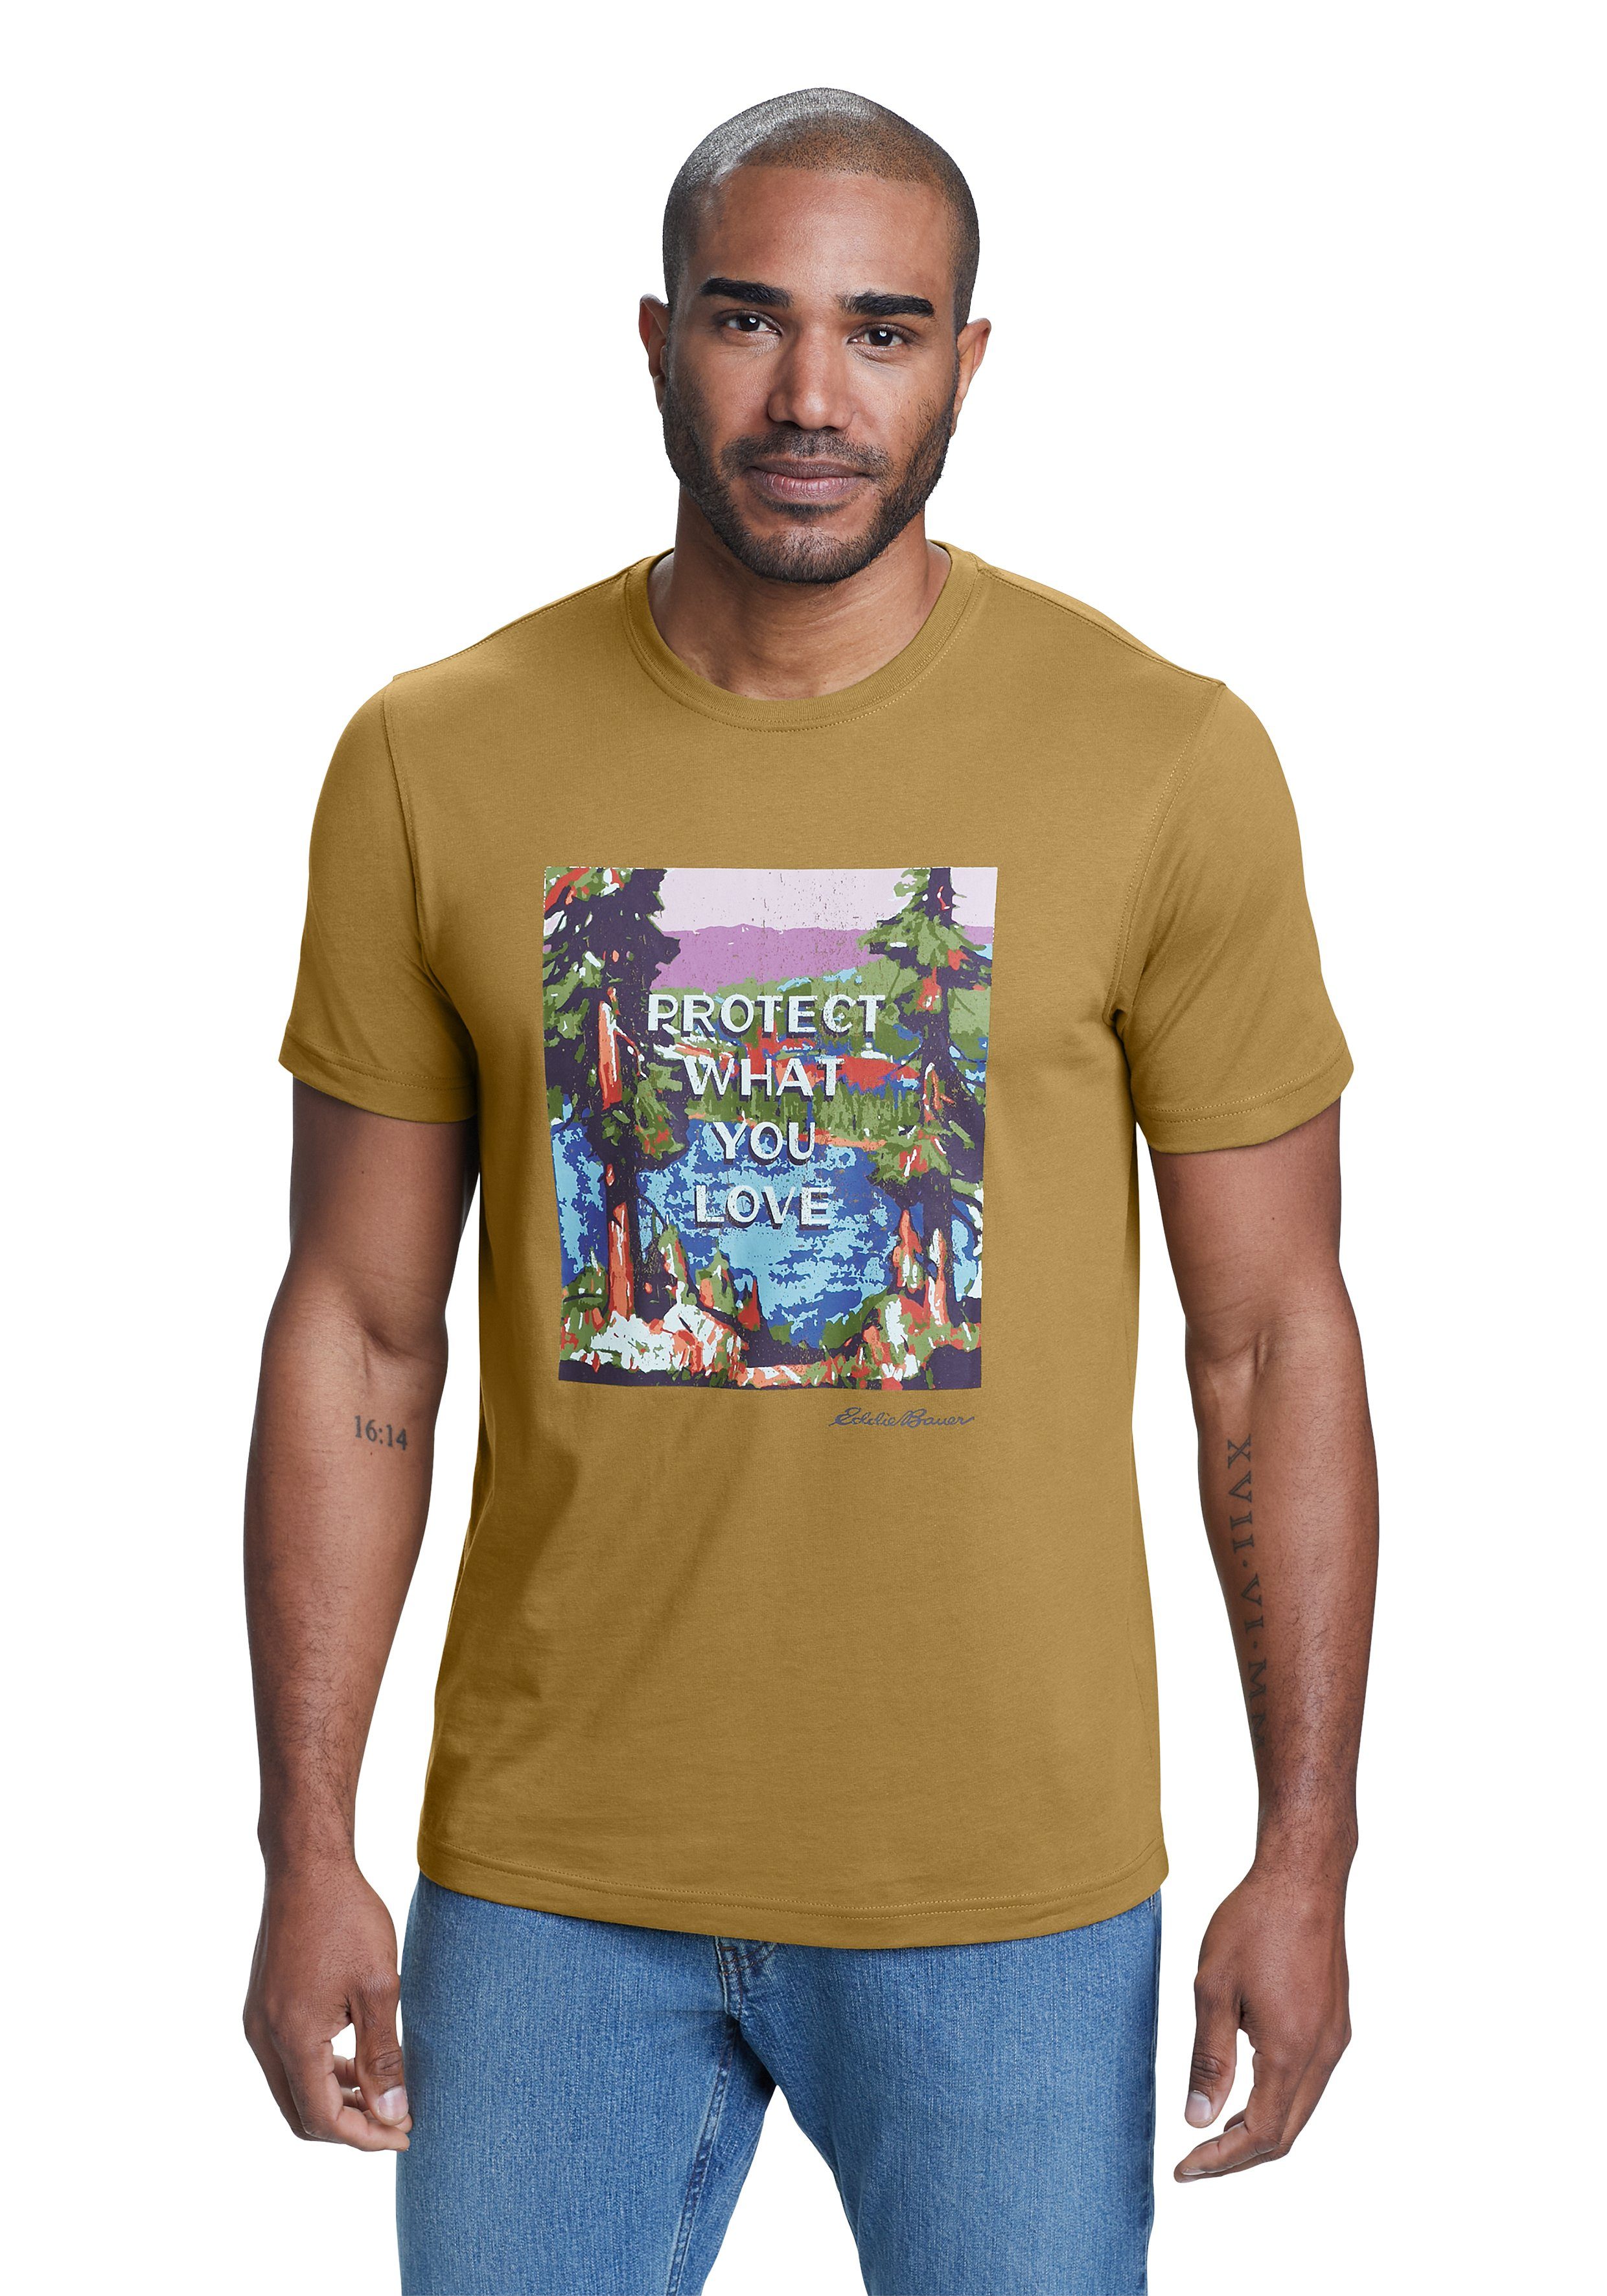 Eddie Bauer T-Shirt Graphic T-Shirt - Protect